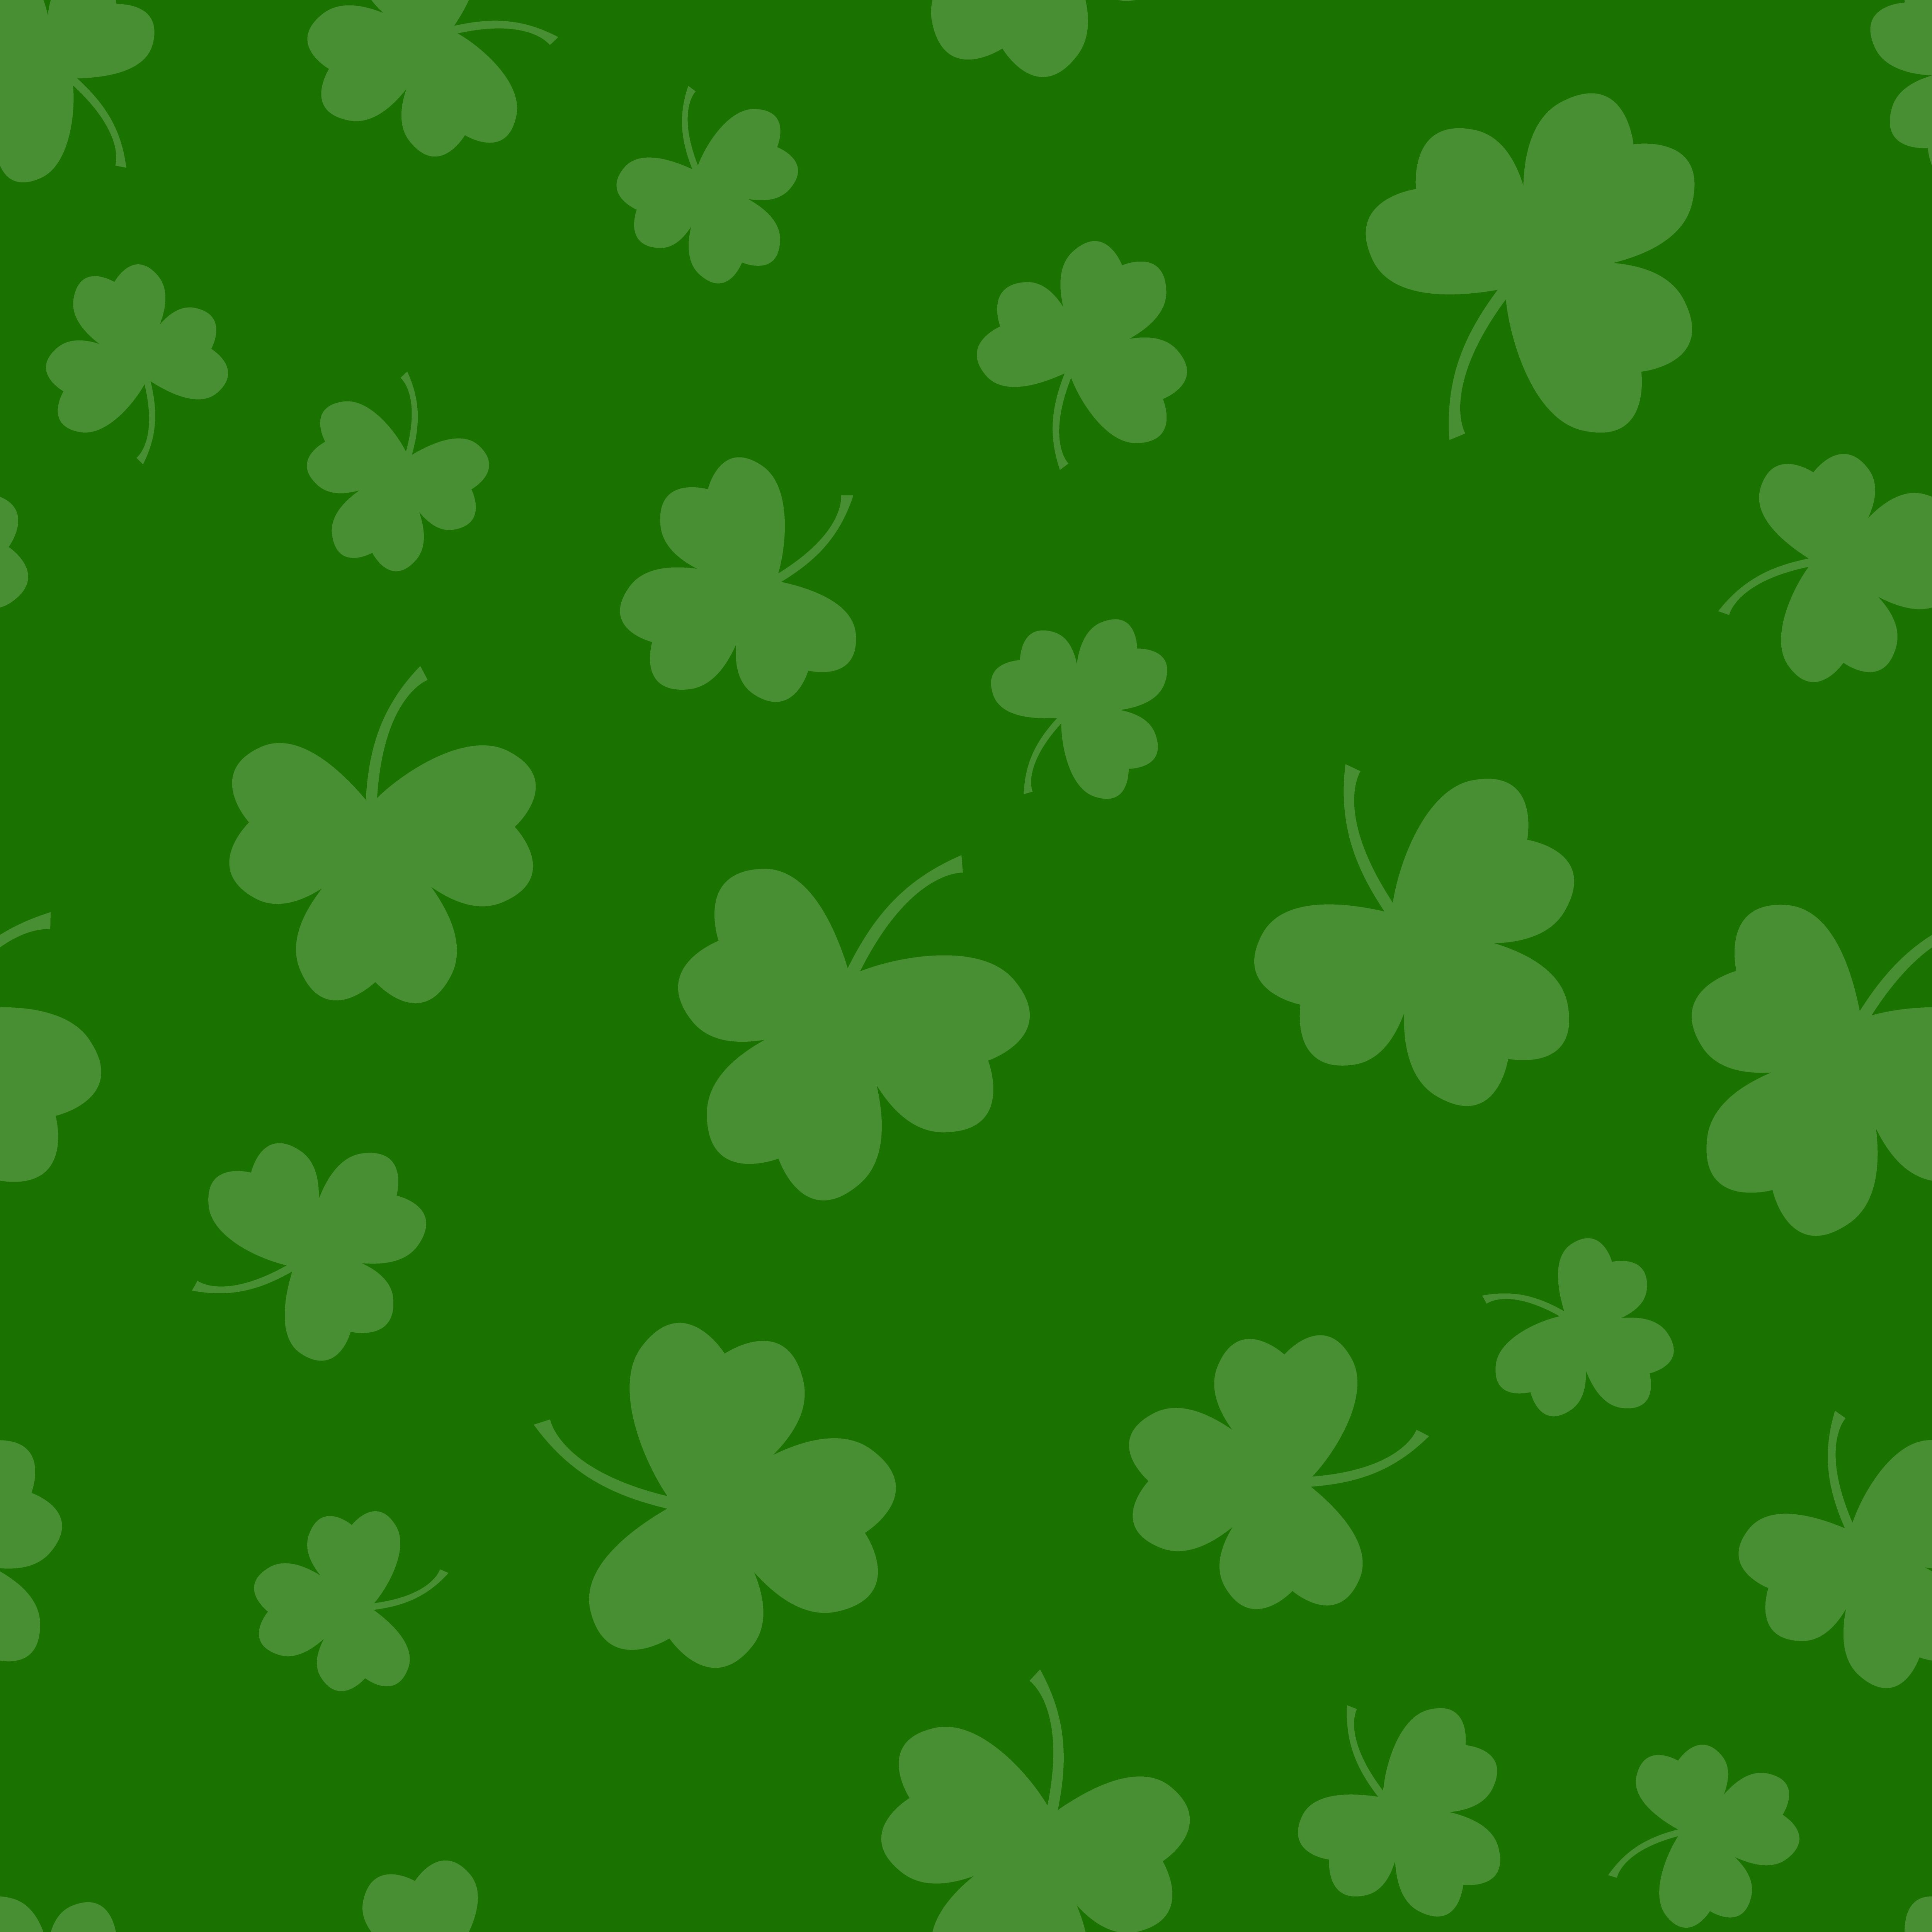 Seamless green shamrock clover leaf pattern background. Saint